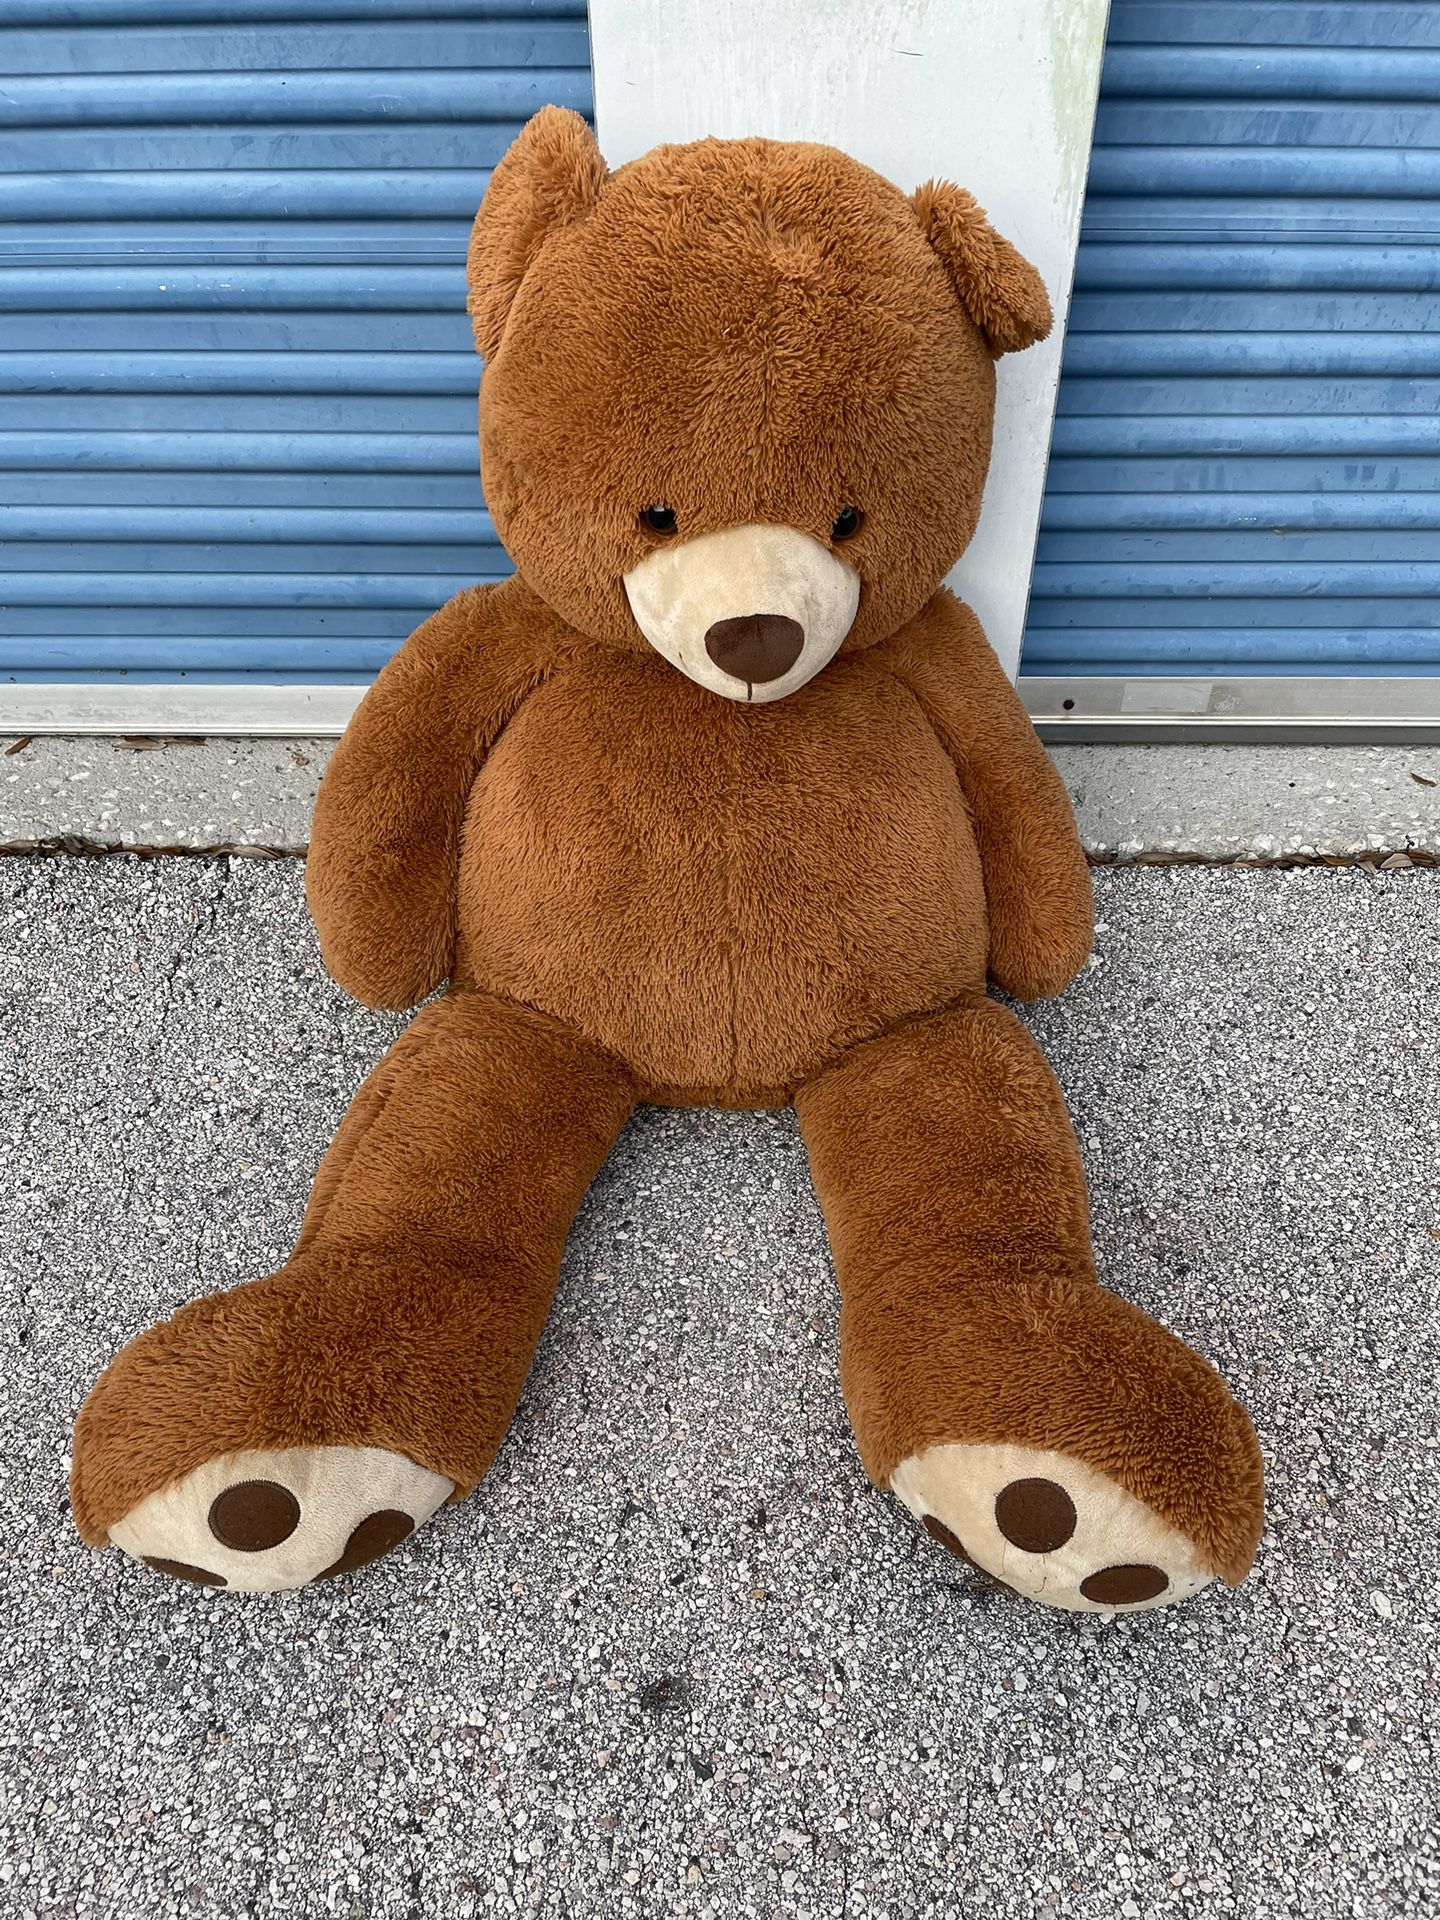 5’feet Long Teddy Bear Stuffed Animal - Used 